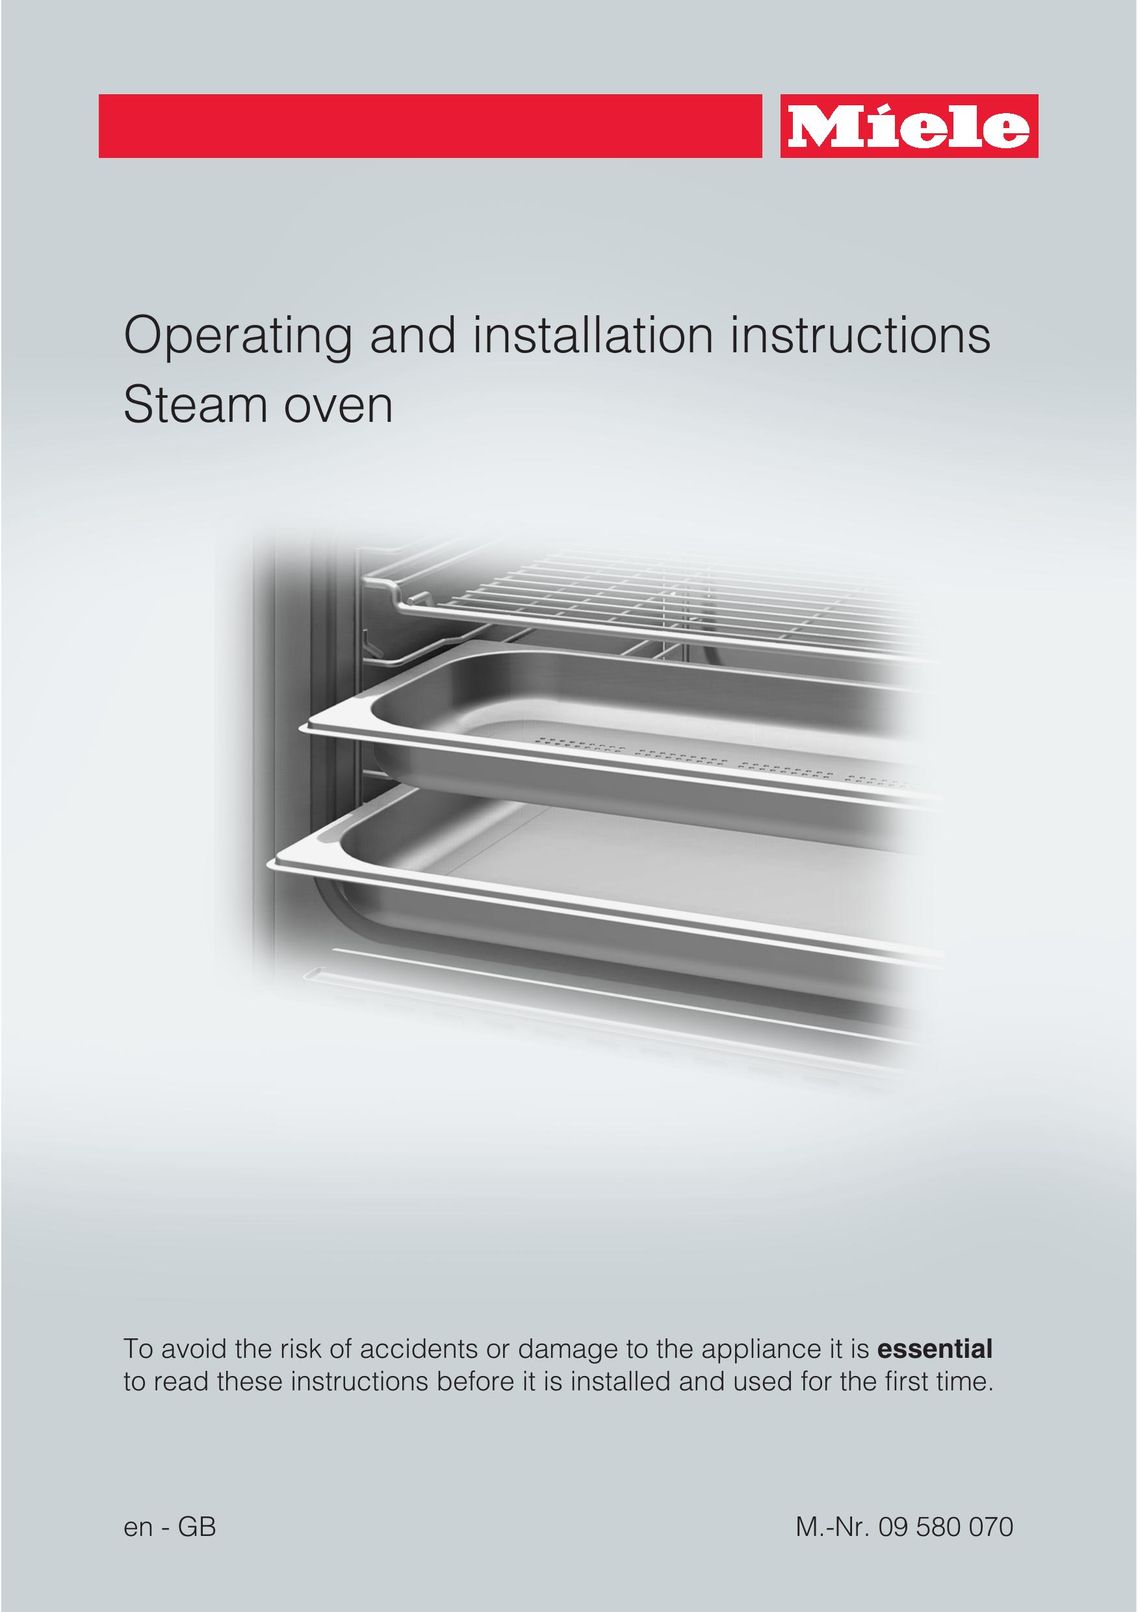 Miele 09-580-070 Oven User Manual